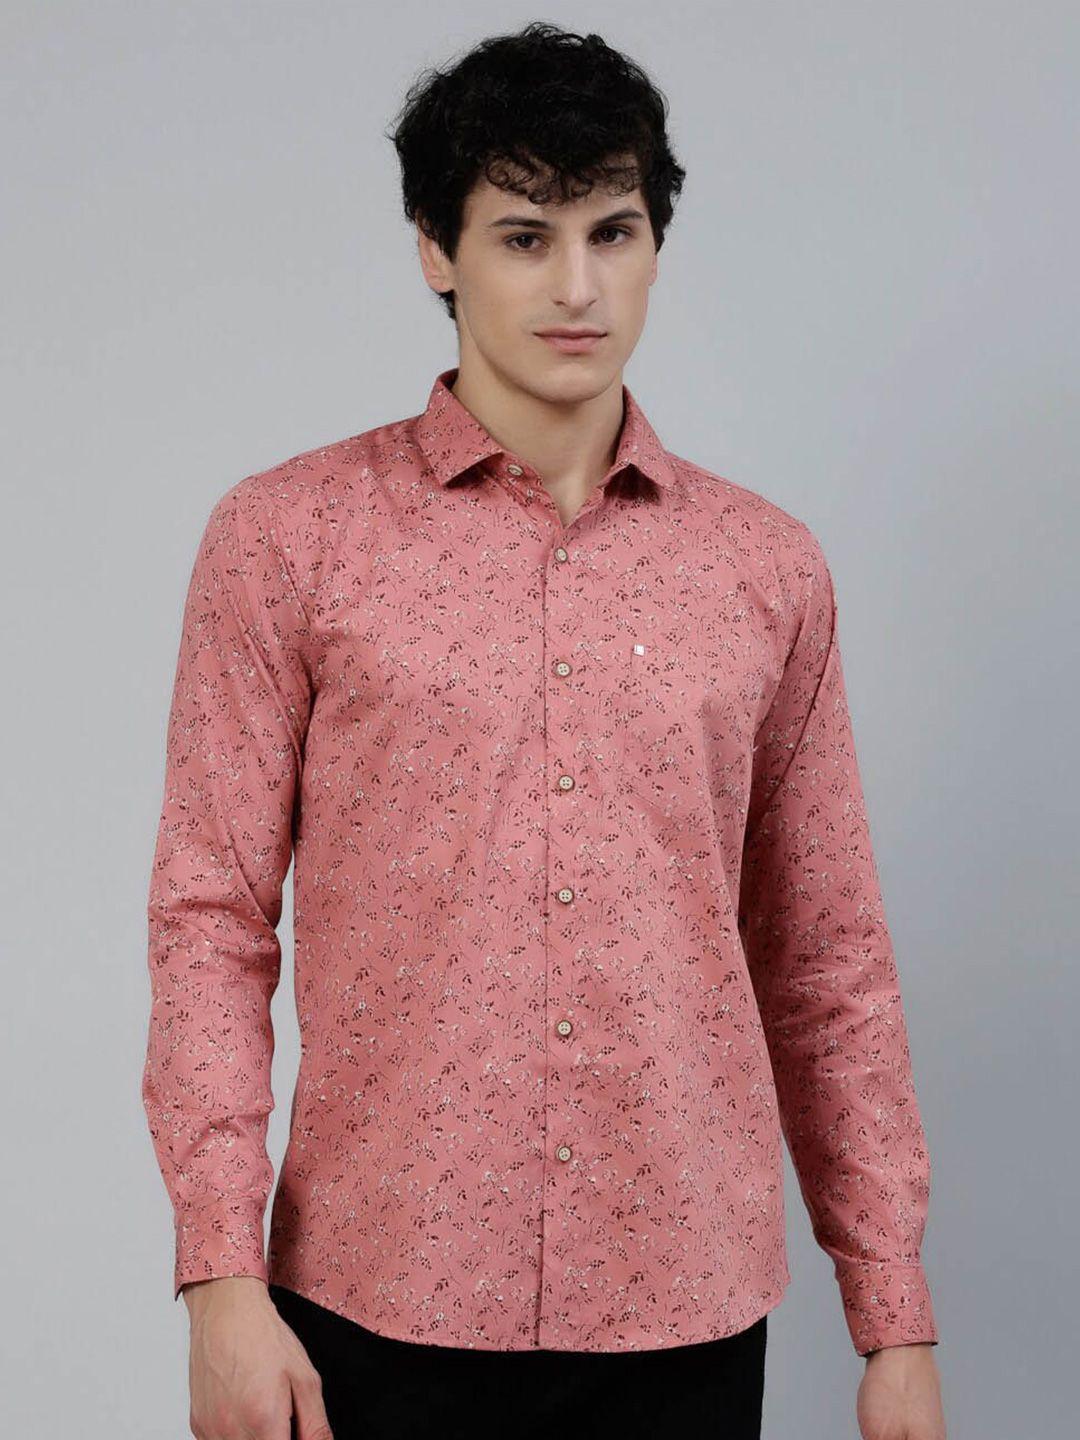 jadeberry standard floral printed casual shirt